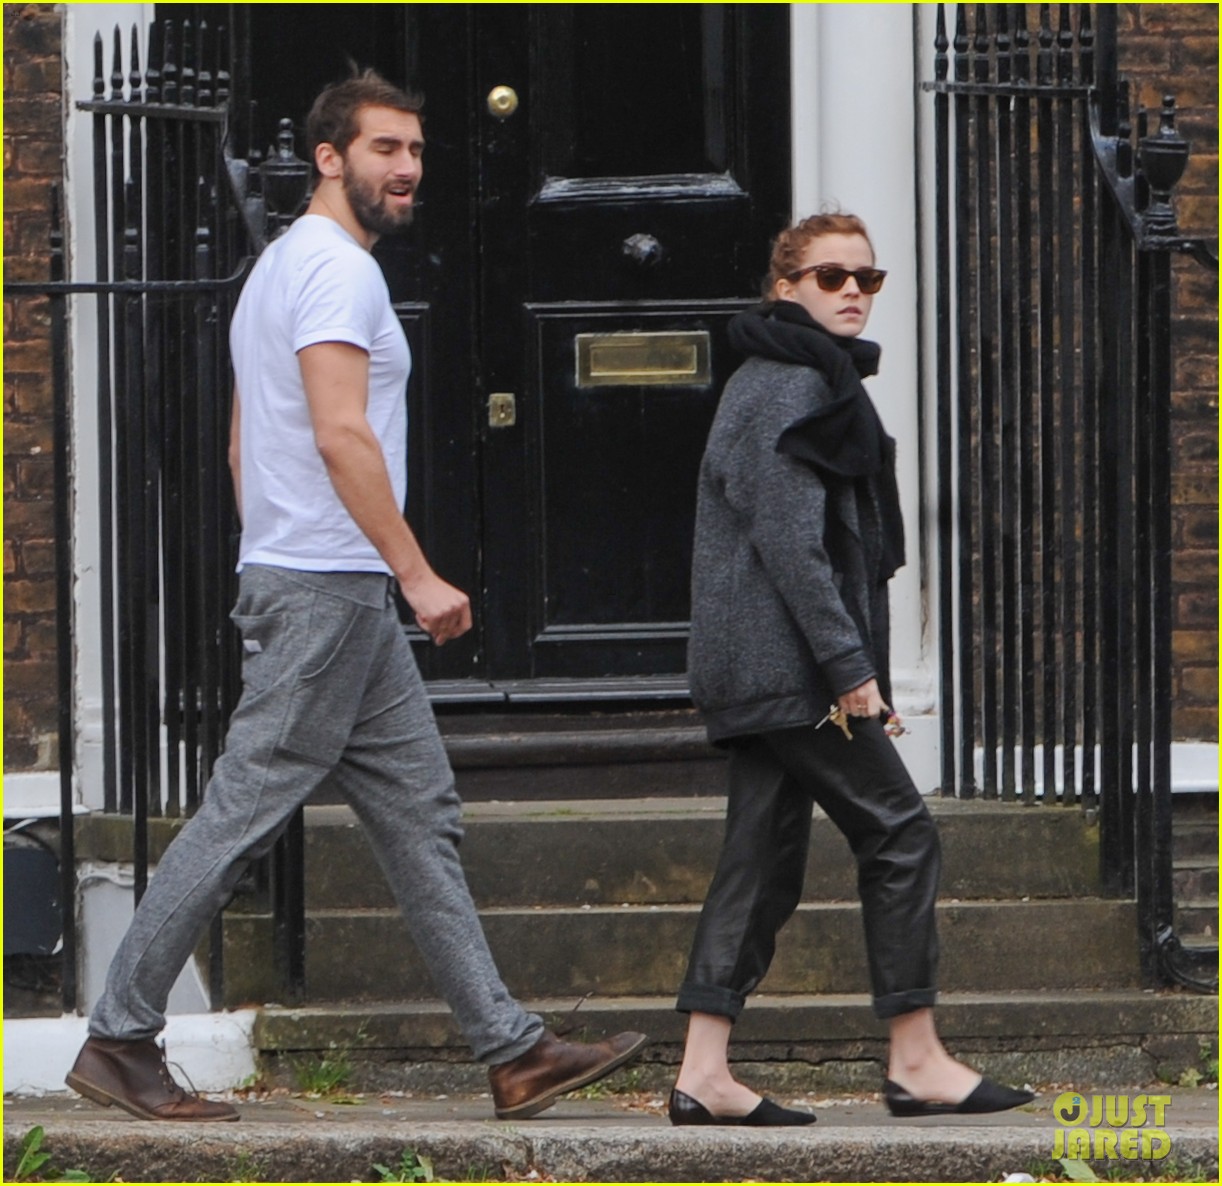 Matthew Jared Emma Watson dating relationship love boyfriend